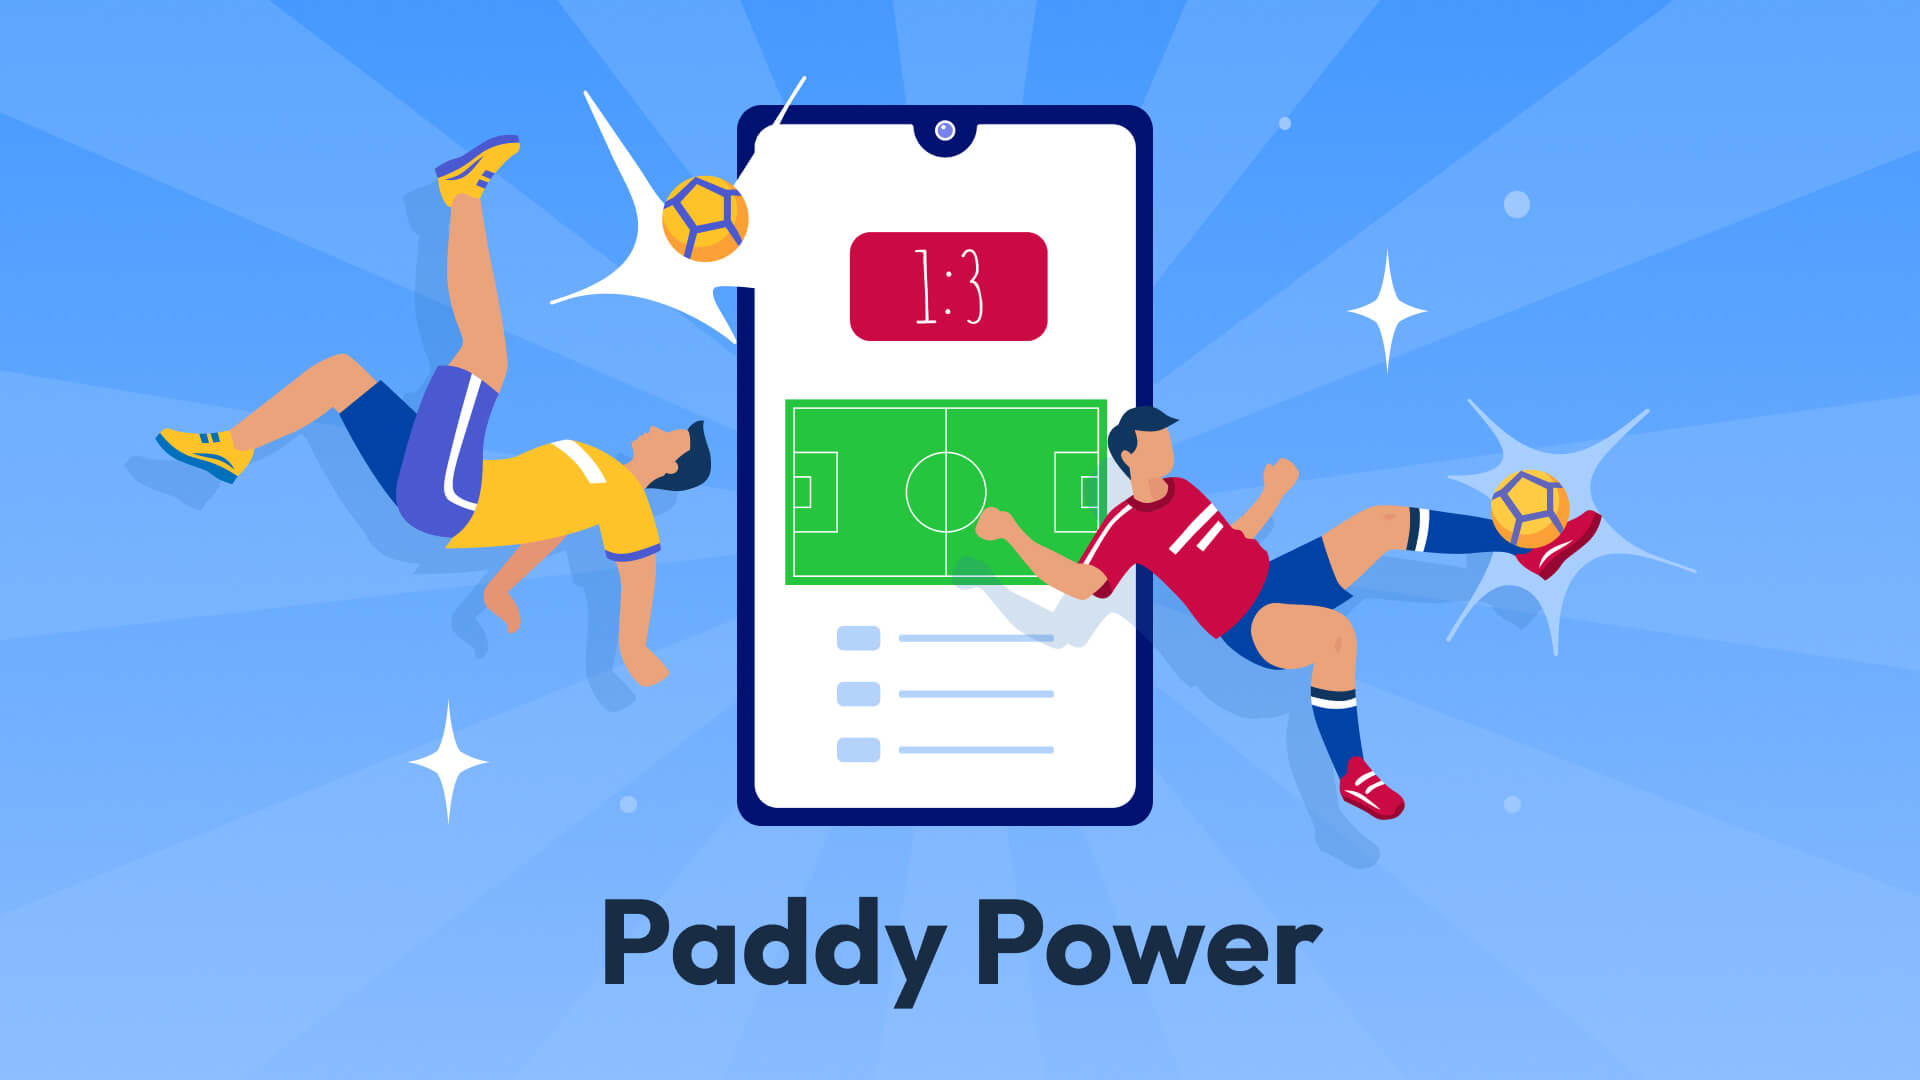 Paddy Power UK